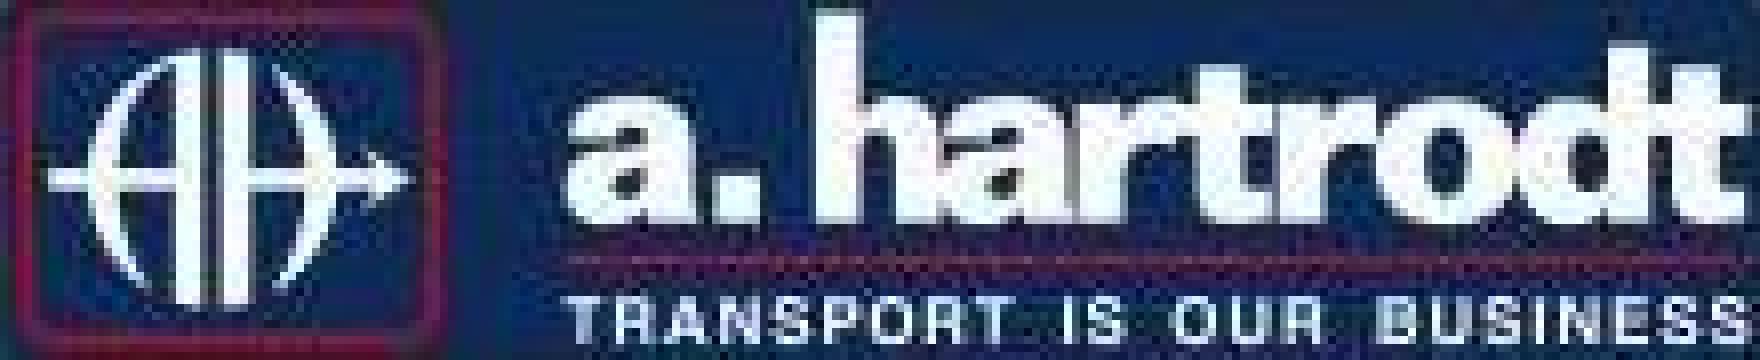 Transport maritim in container LCL/FCL de la A. Hartrodt Romania Srl